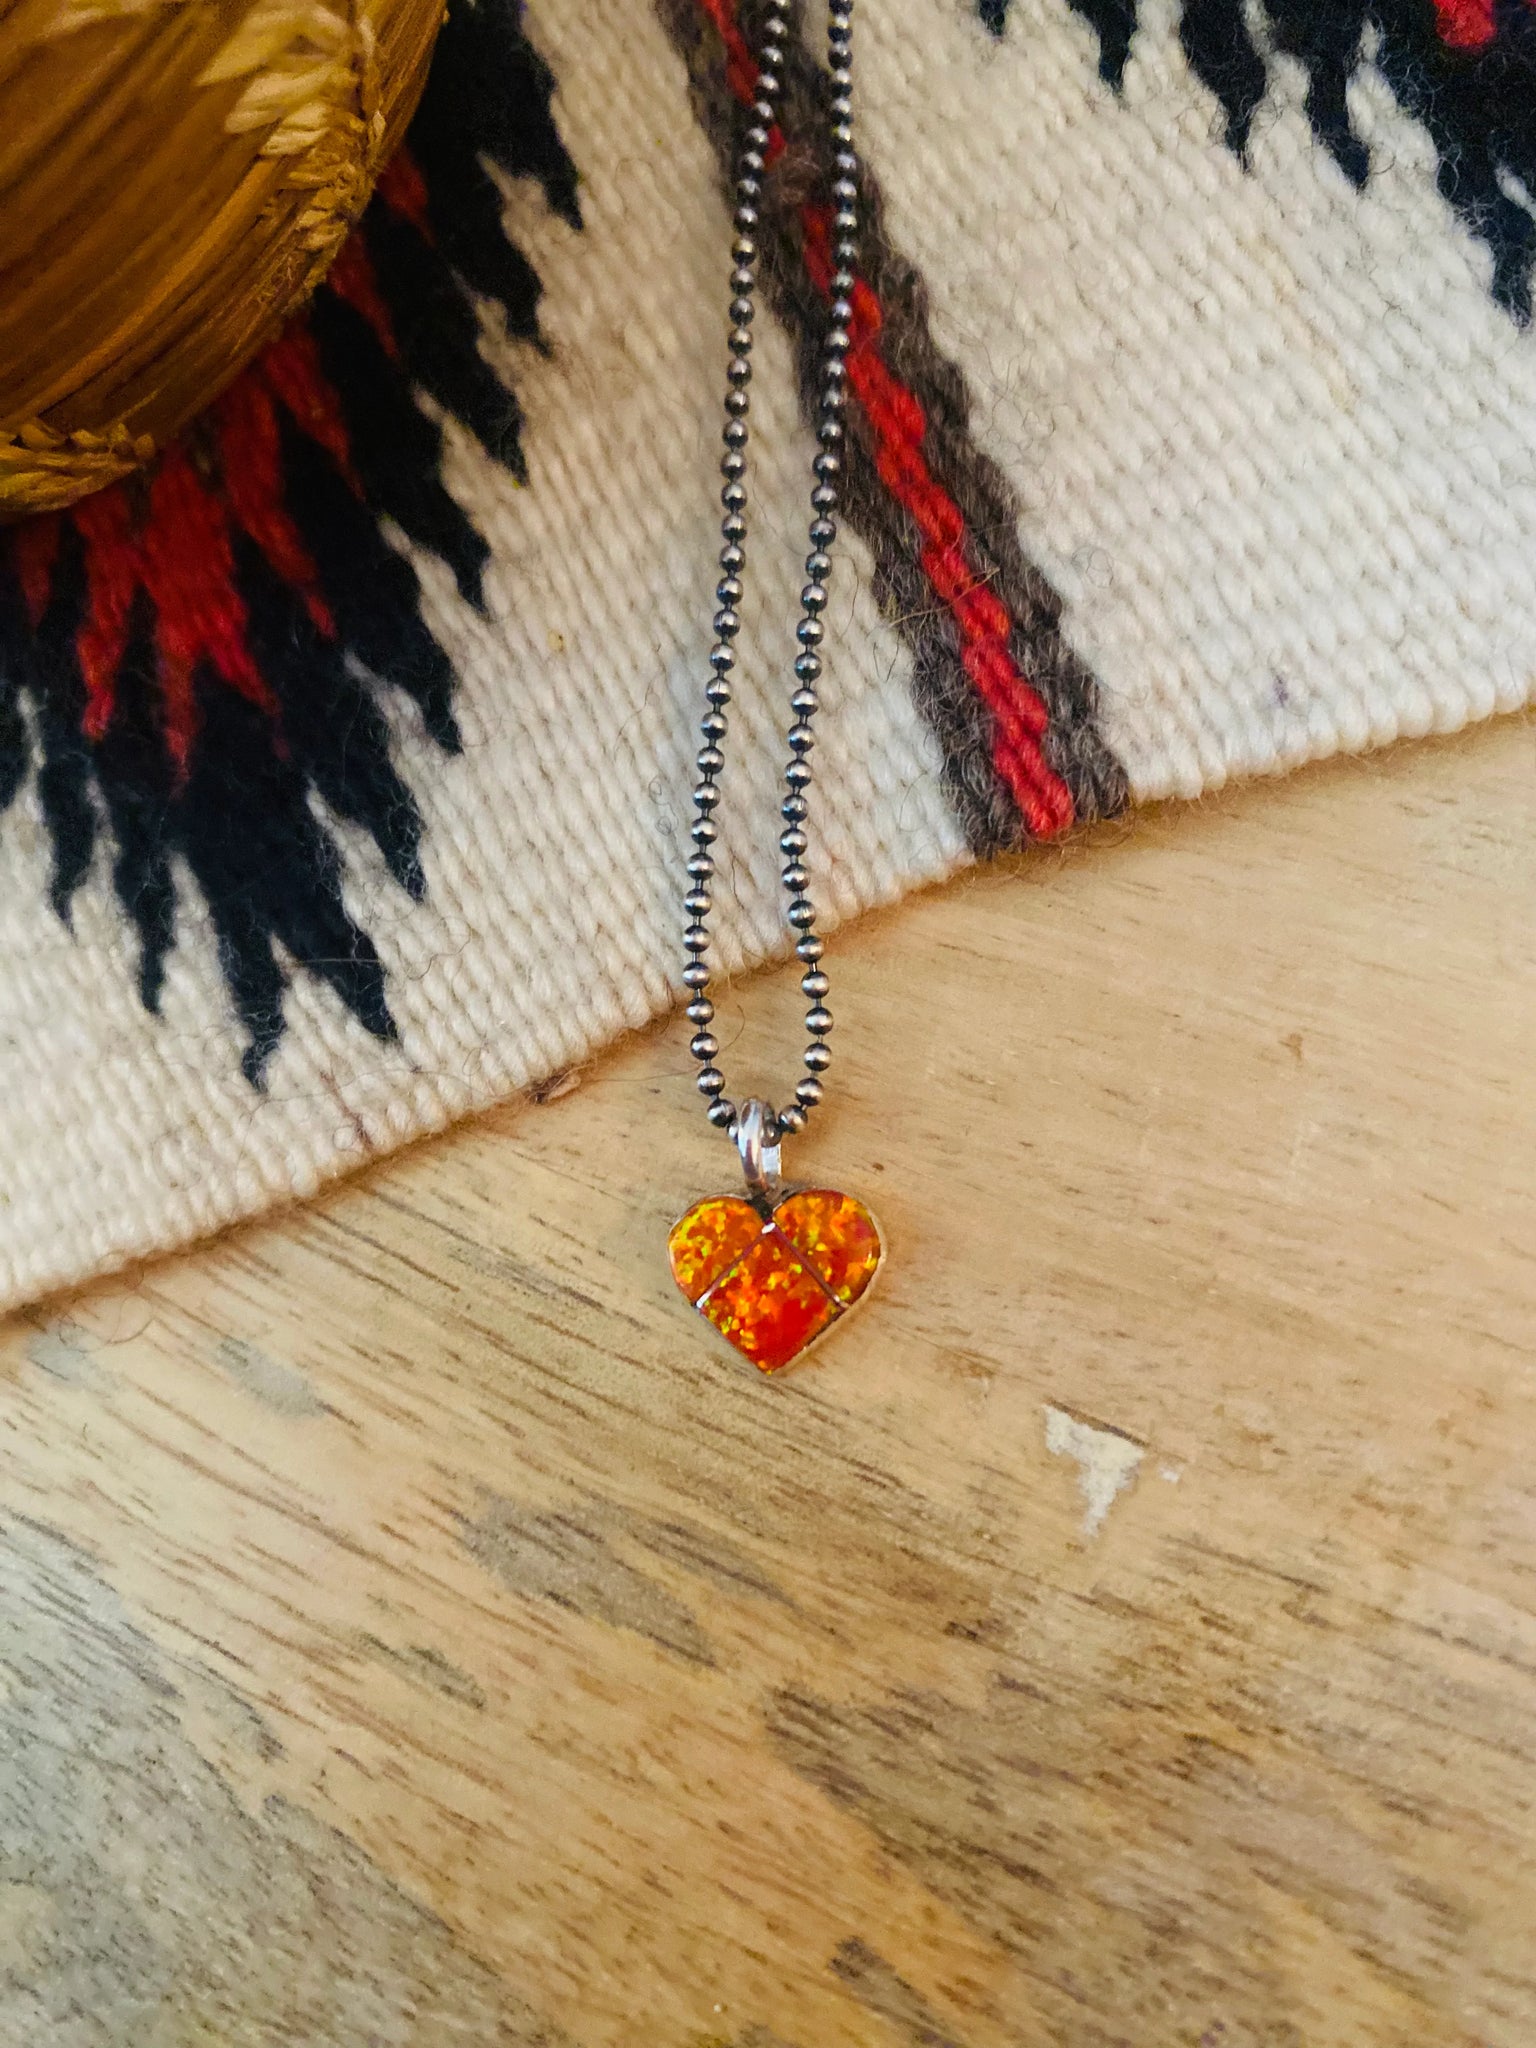 Wooden Heart Ornaments by Handy Happy– Fire Opal Company